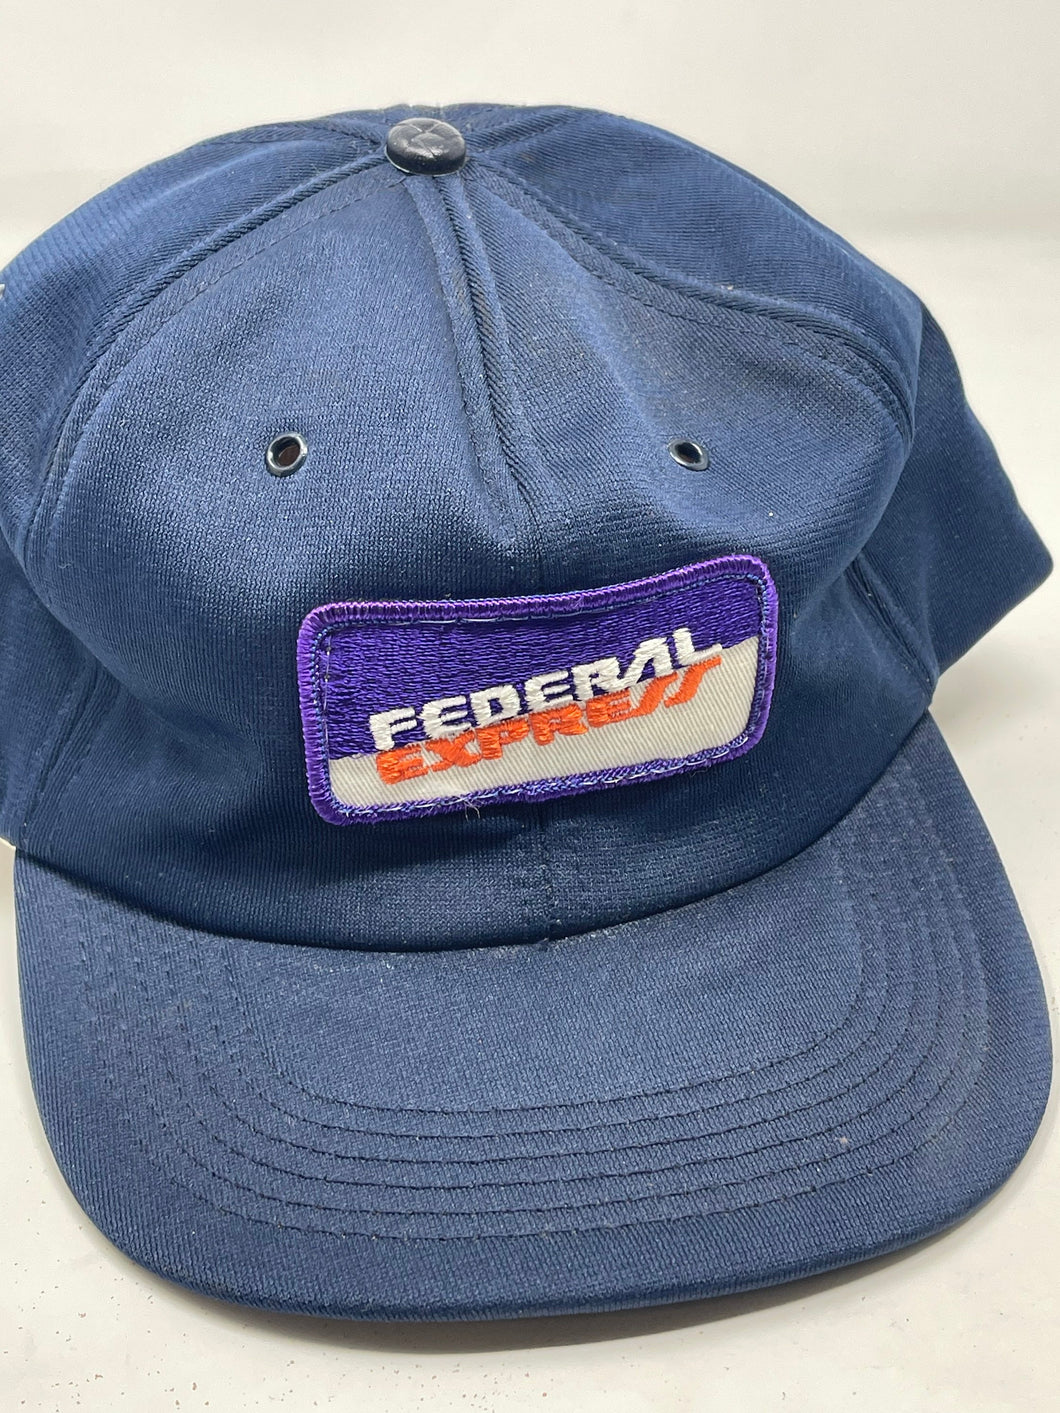 Vintage 90’s FEDERAL EXPRESS FedEx navy snapback hat B51